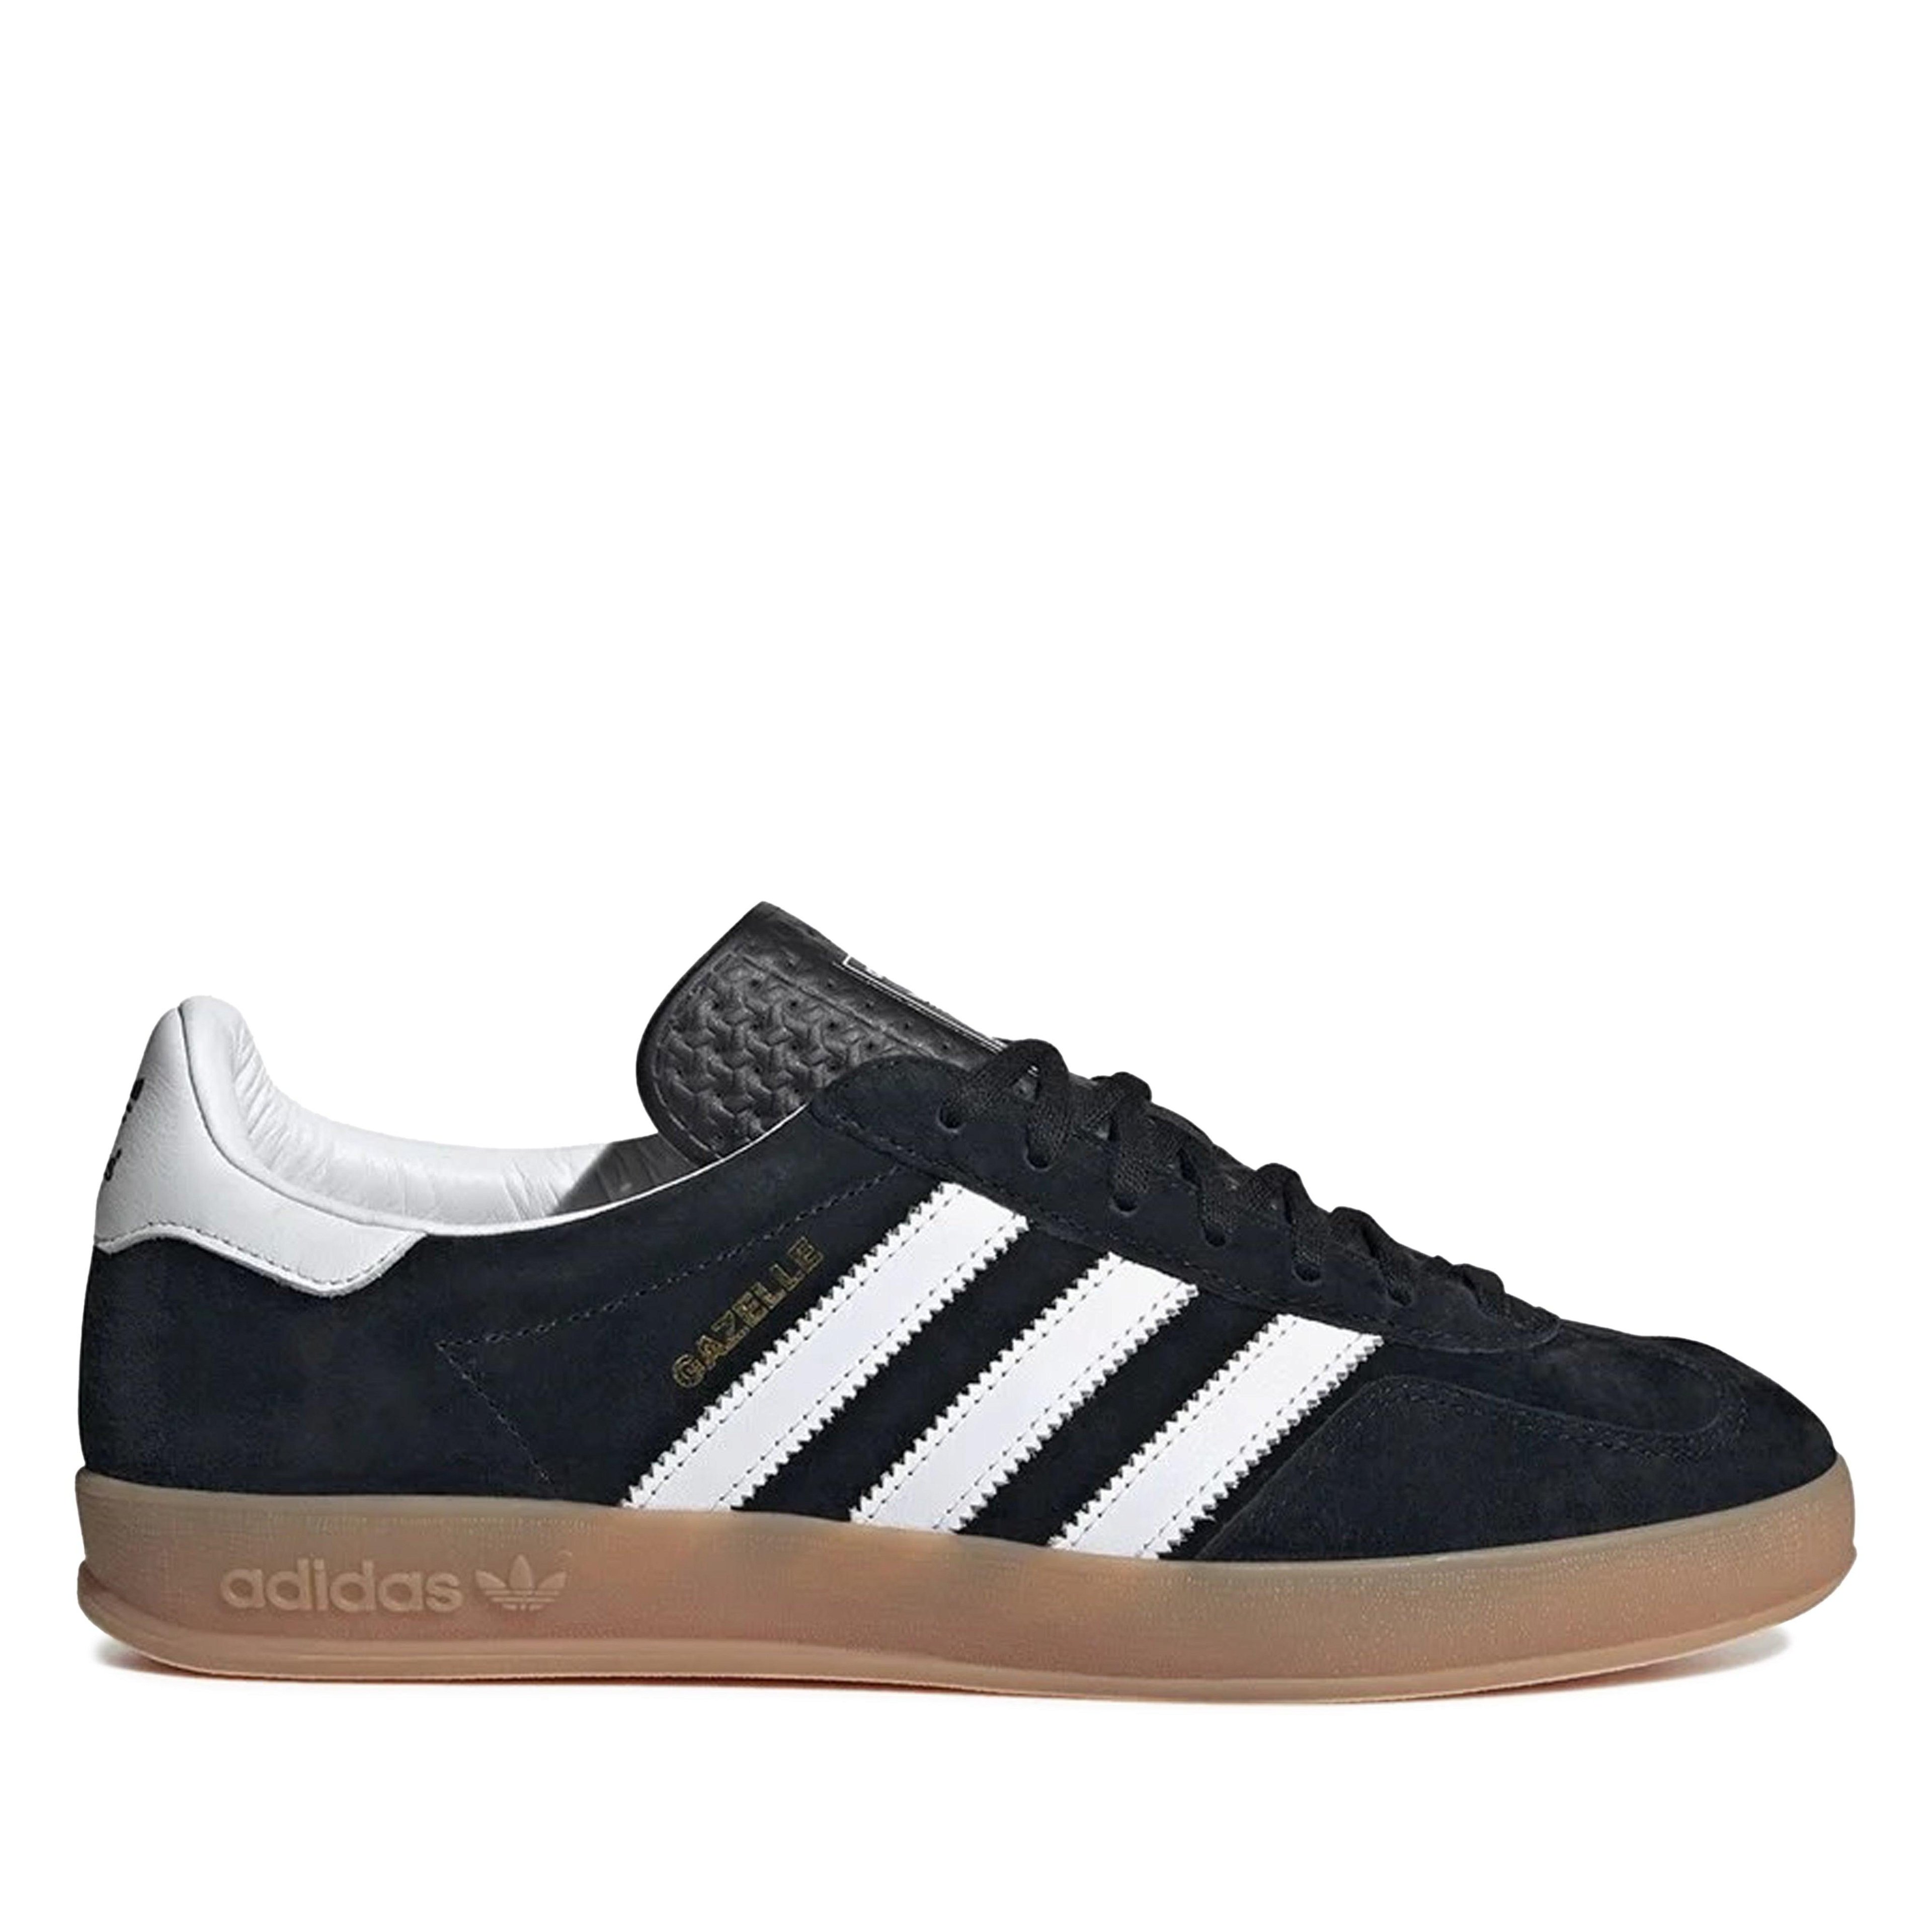 Adidas - Gazelle Indoor Sneakers - (Black) by ADIDAS